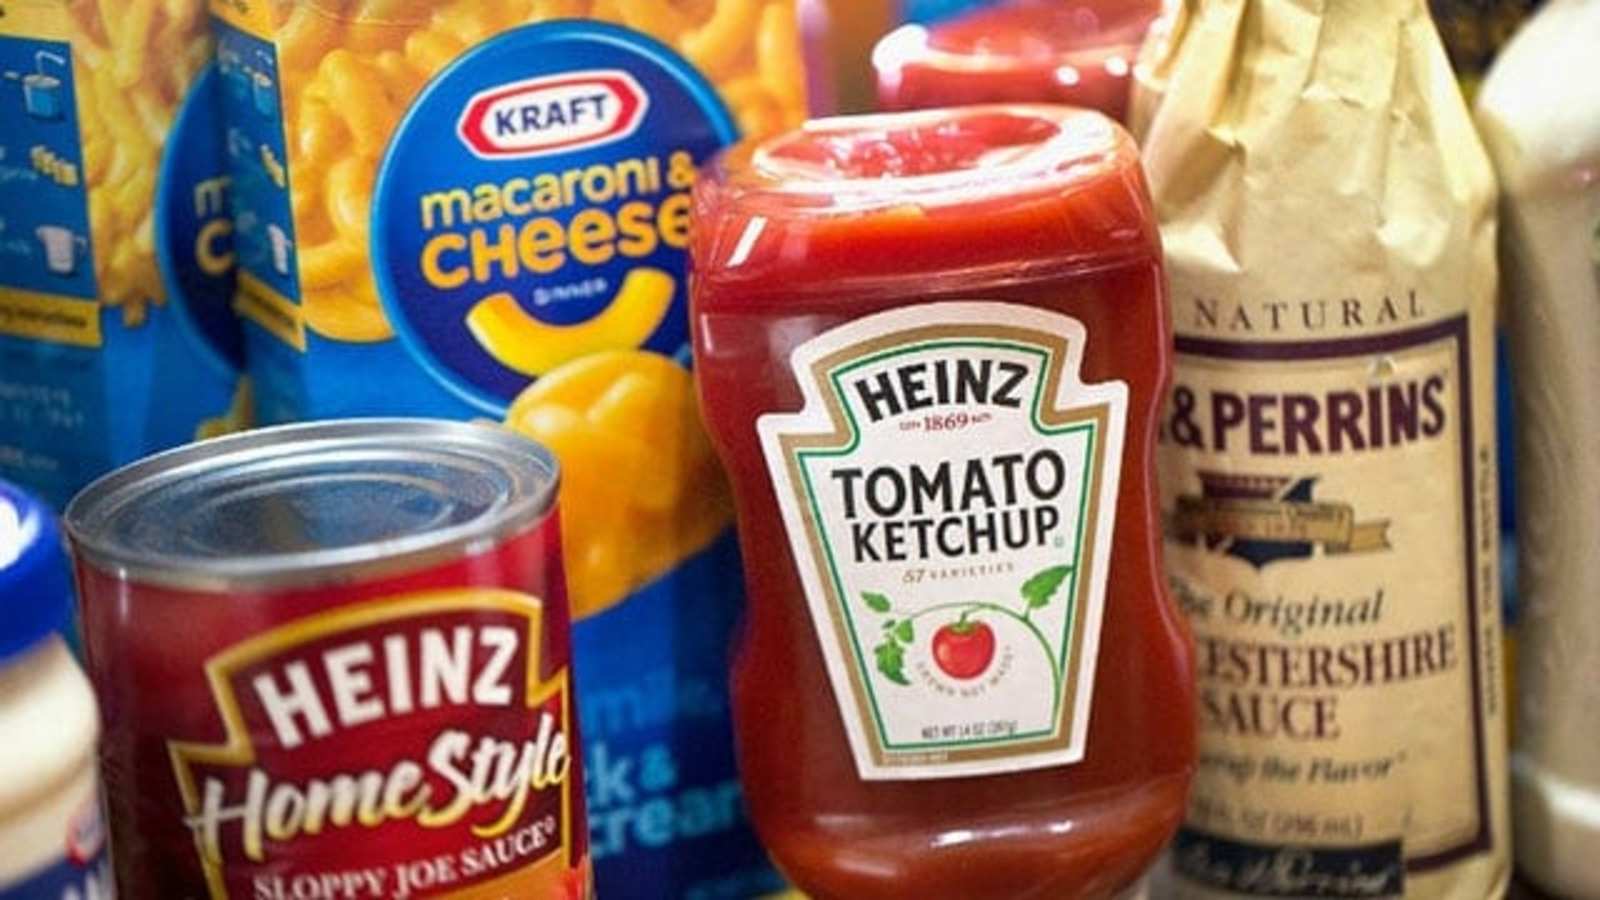 Kraft Heinz reports decline in net sales as pandemic boom starts to wane